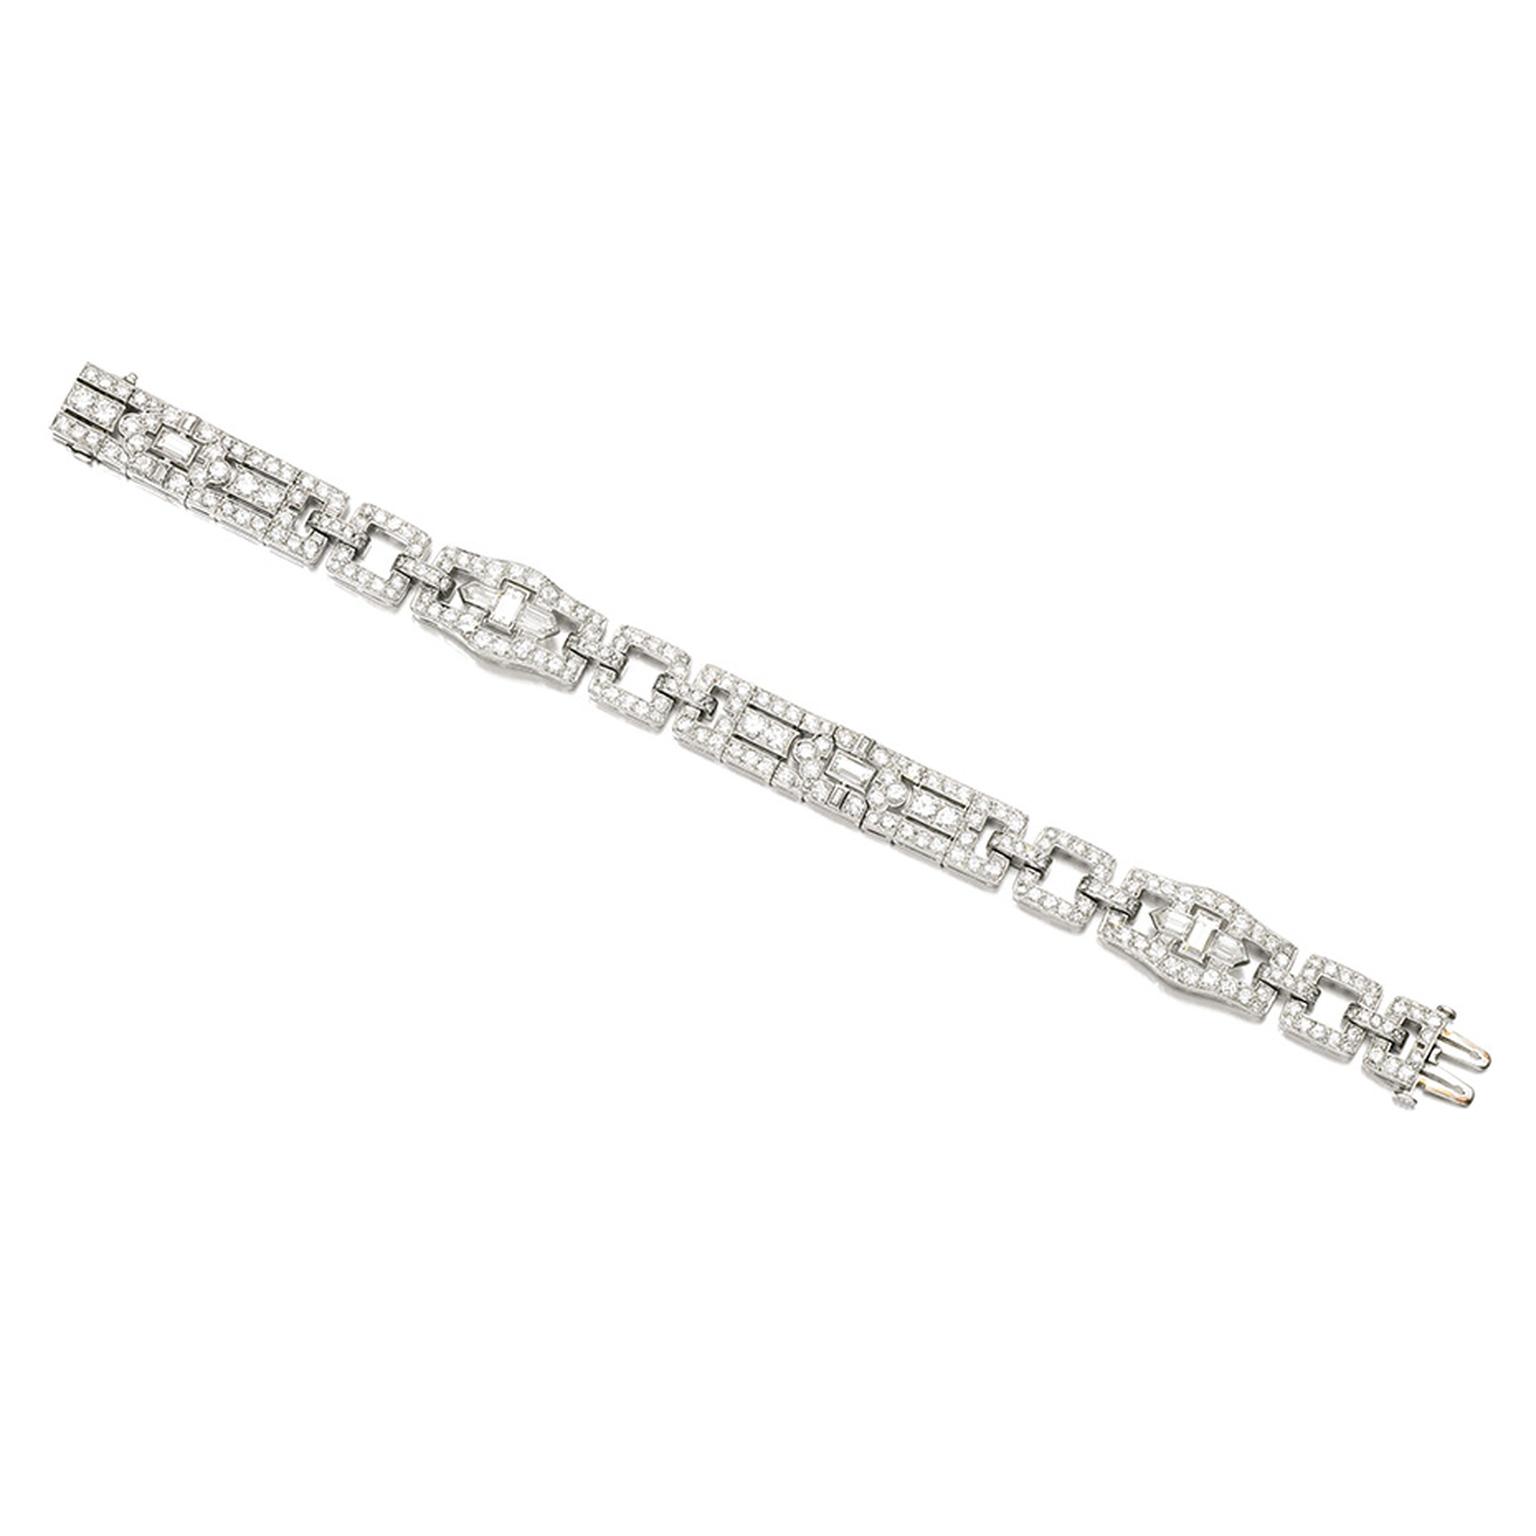 Lot 195, a 1920s Cartier diamond bracelet